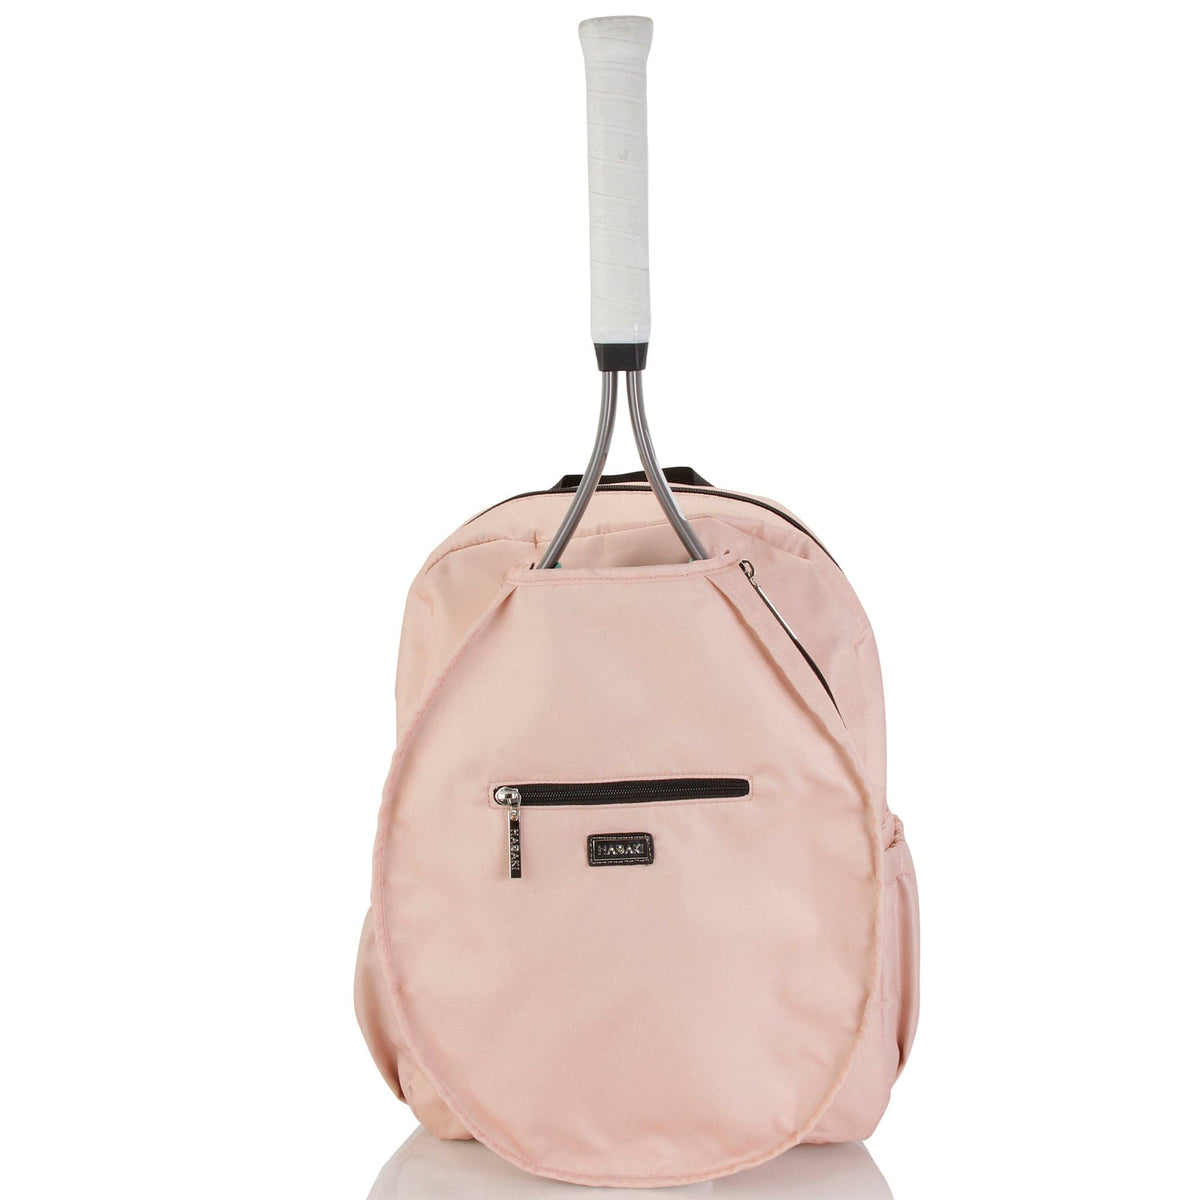 Hadaki Tennis Backpack (HDK928)